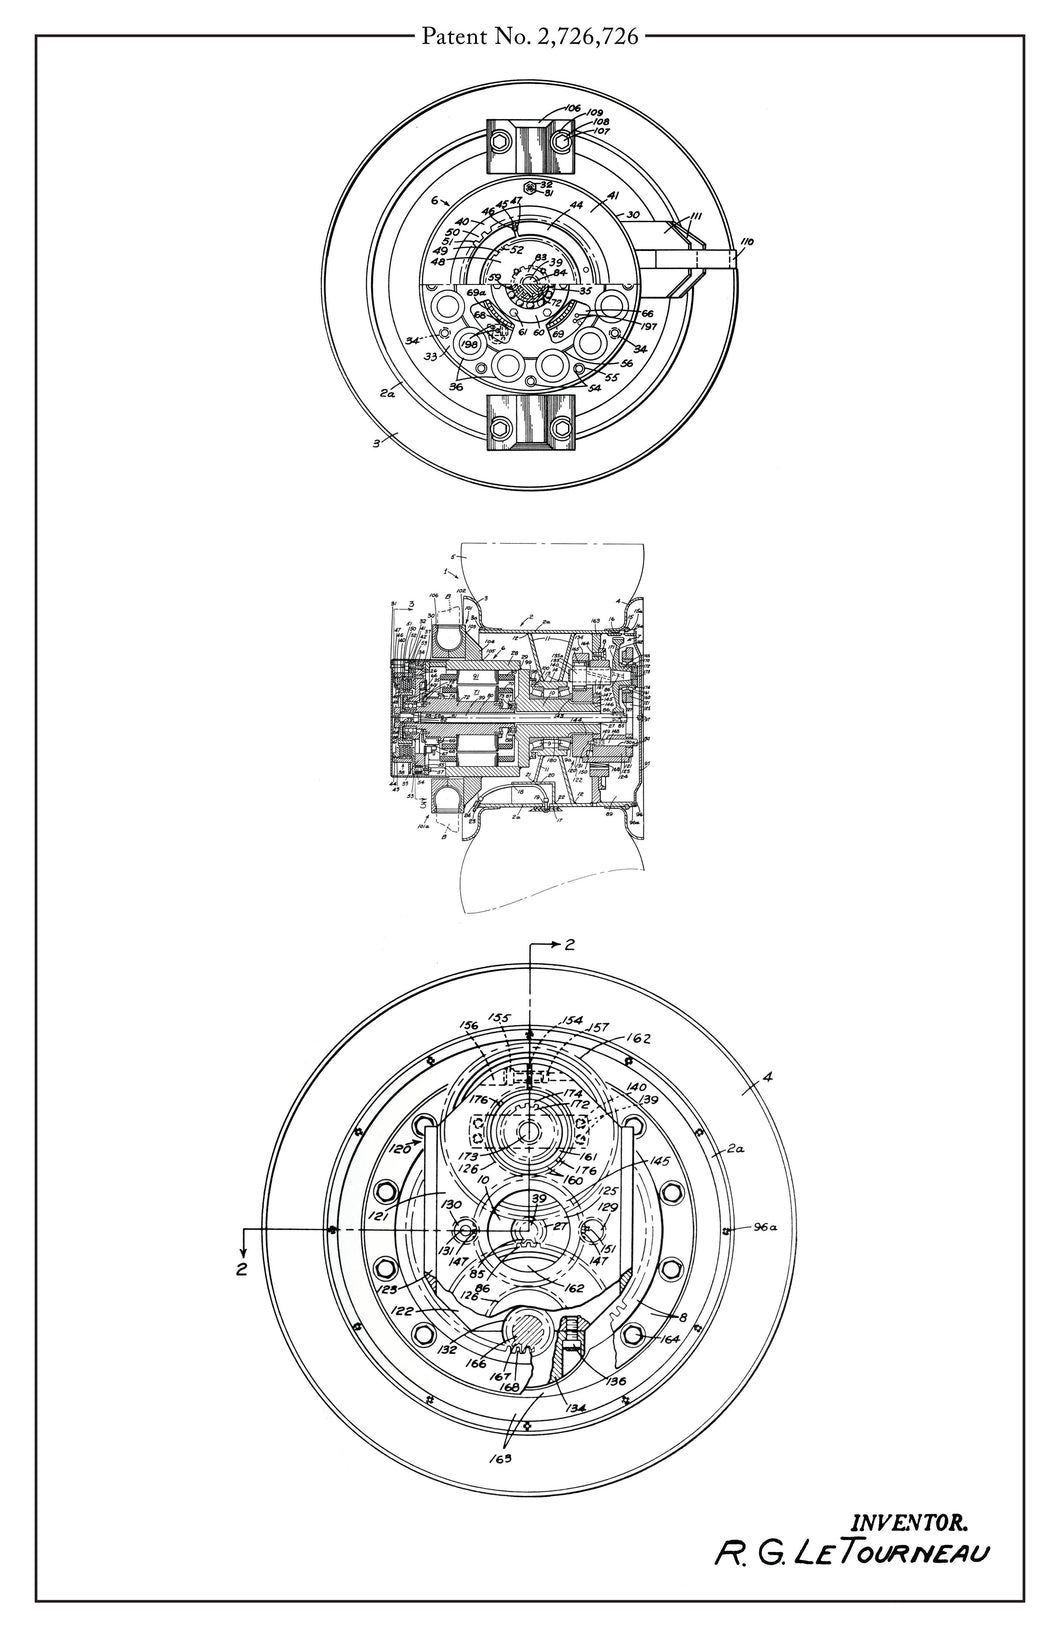 Electric Wheel - Patent No. 2,726,726